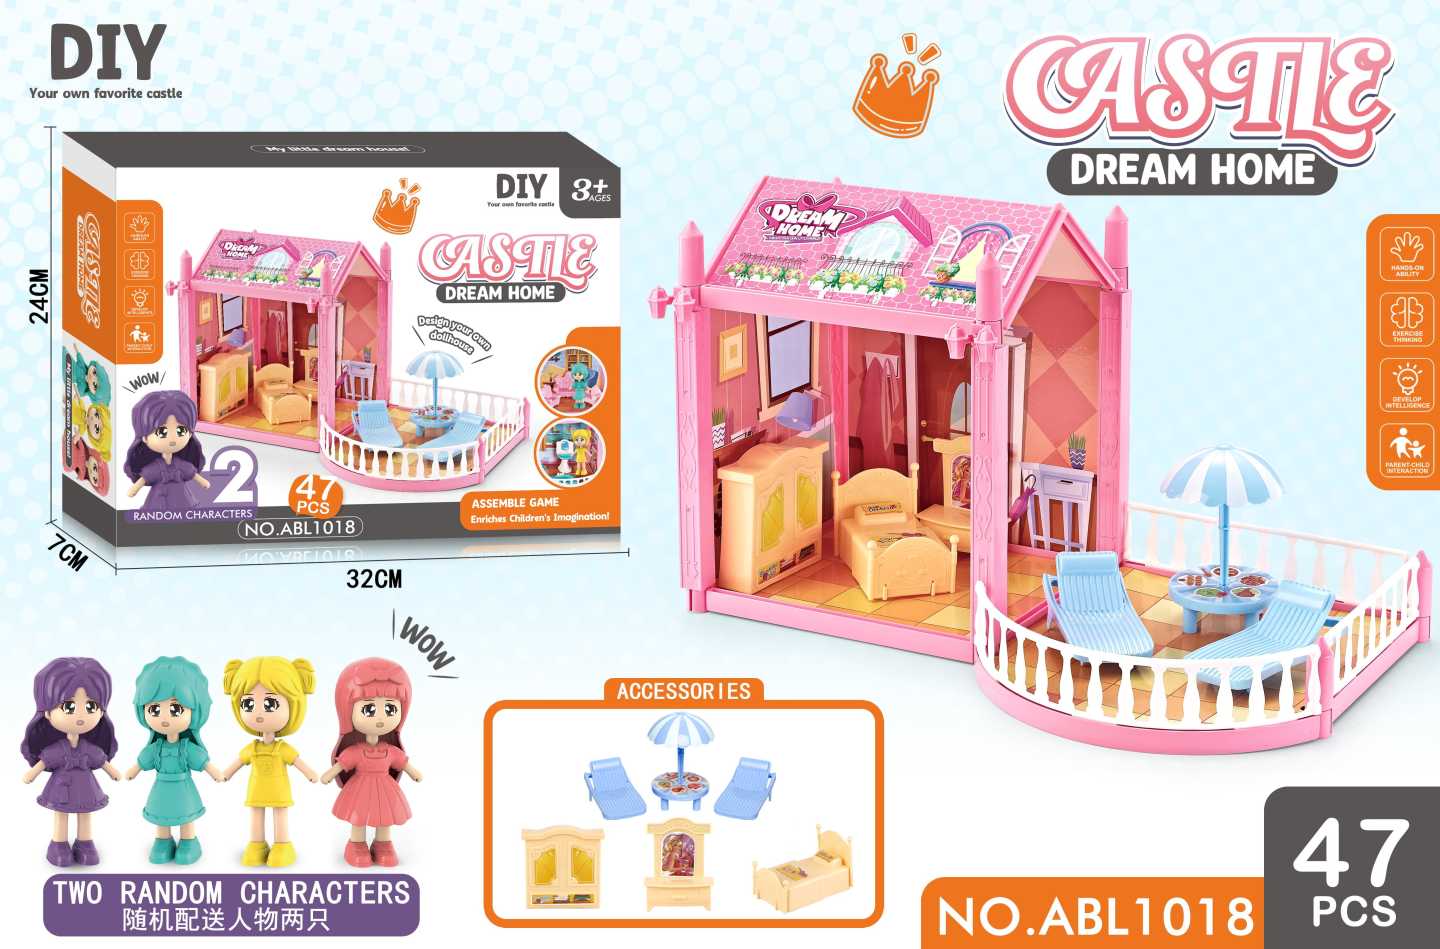 DIY dollhouse - Dream Home - 444443